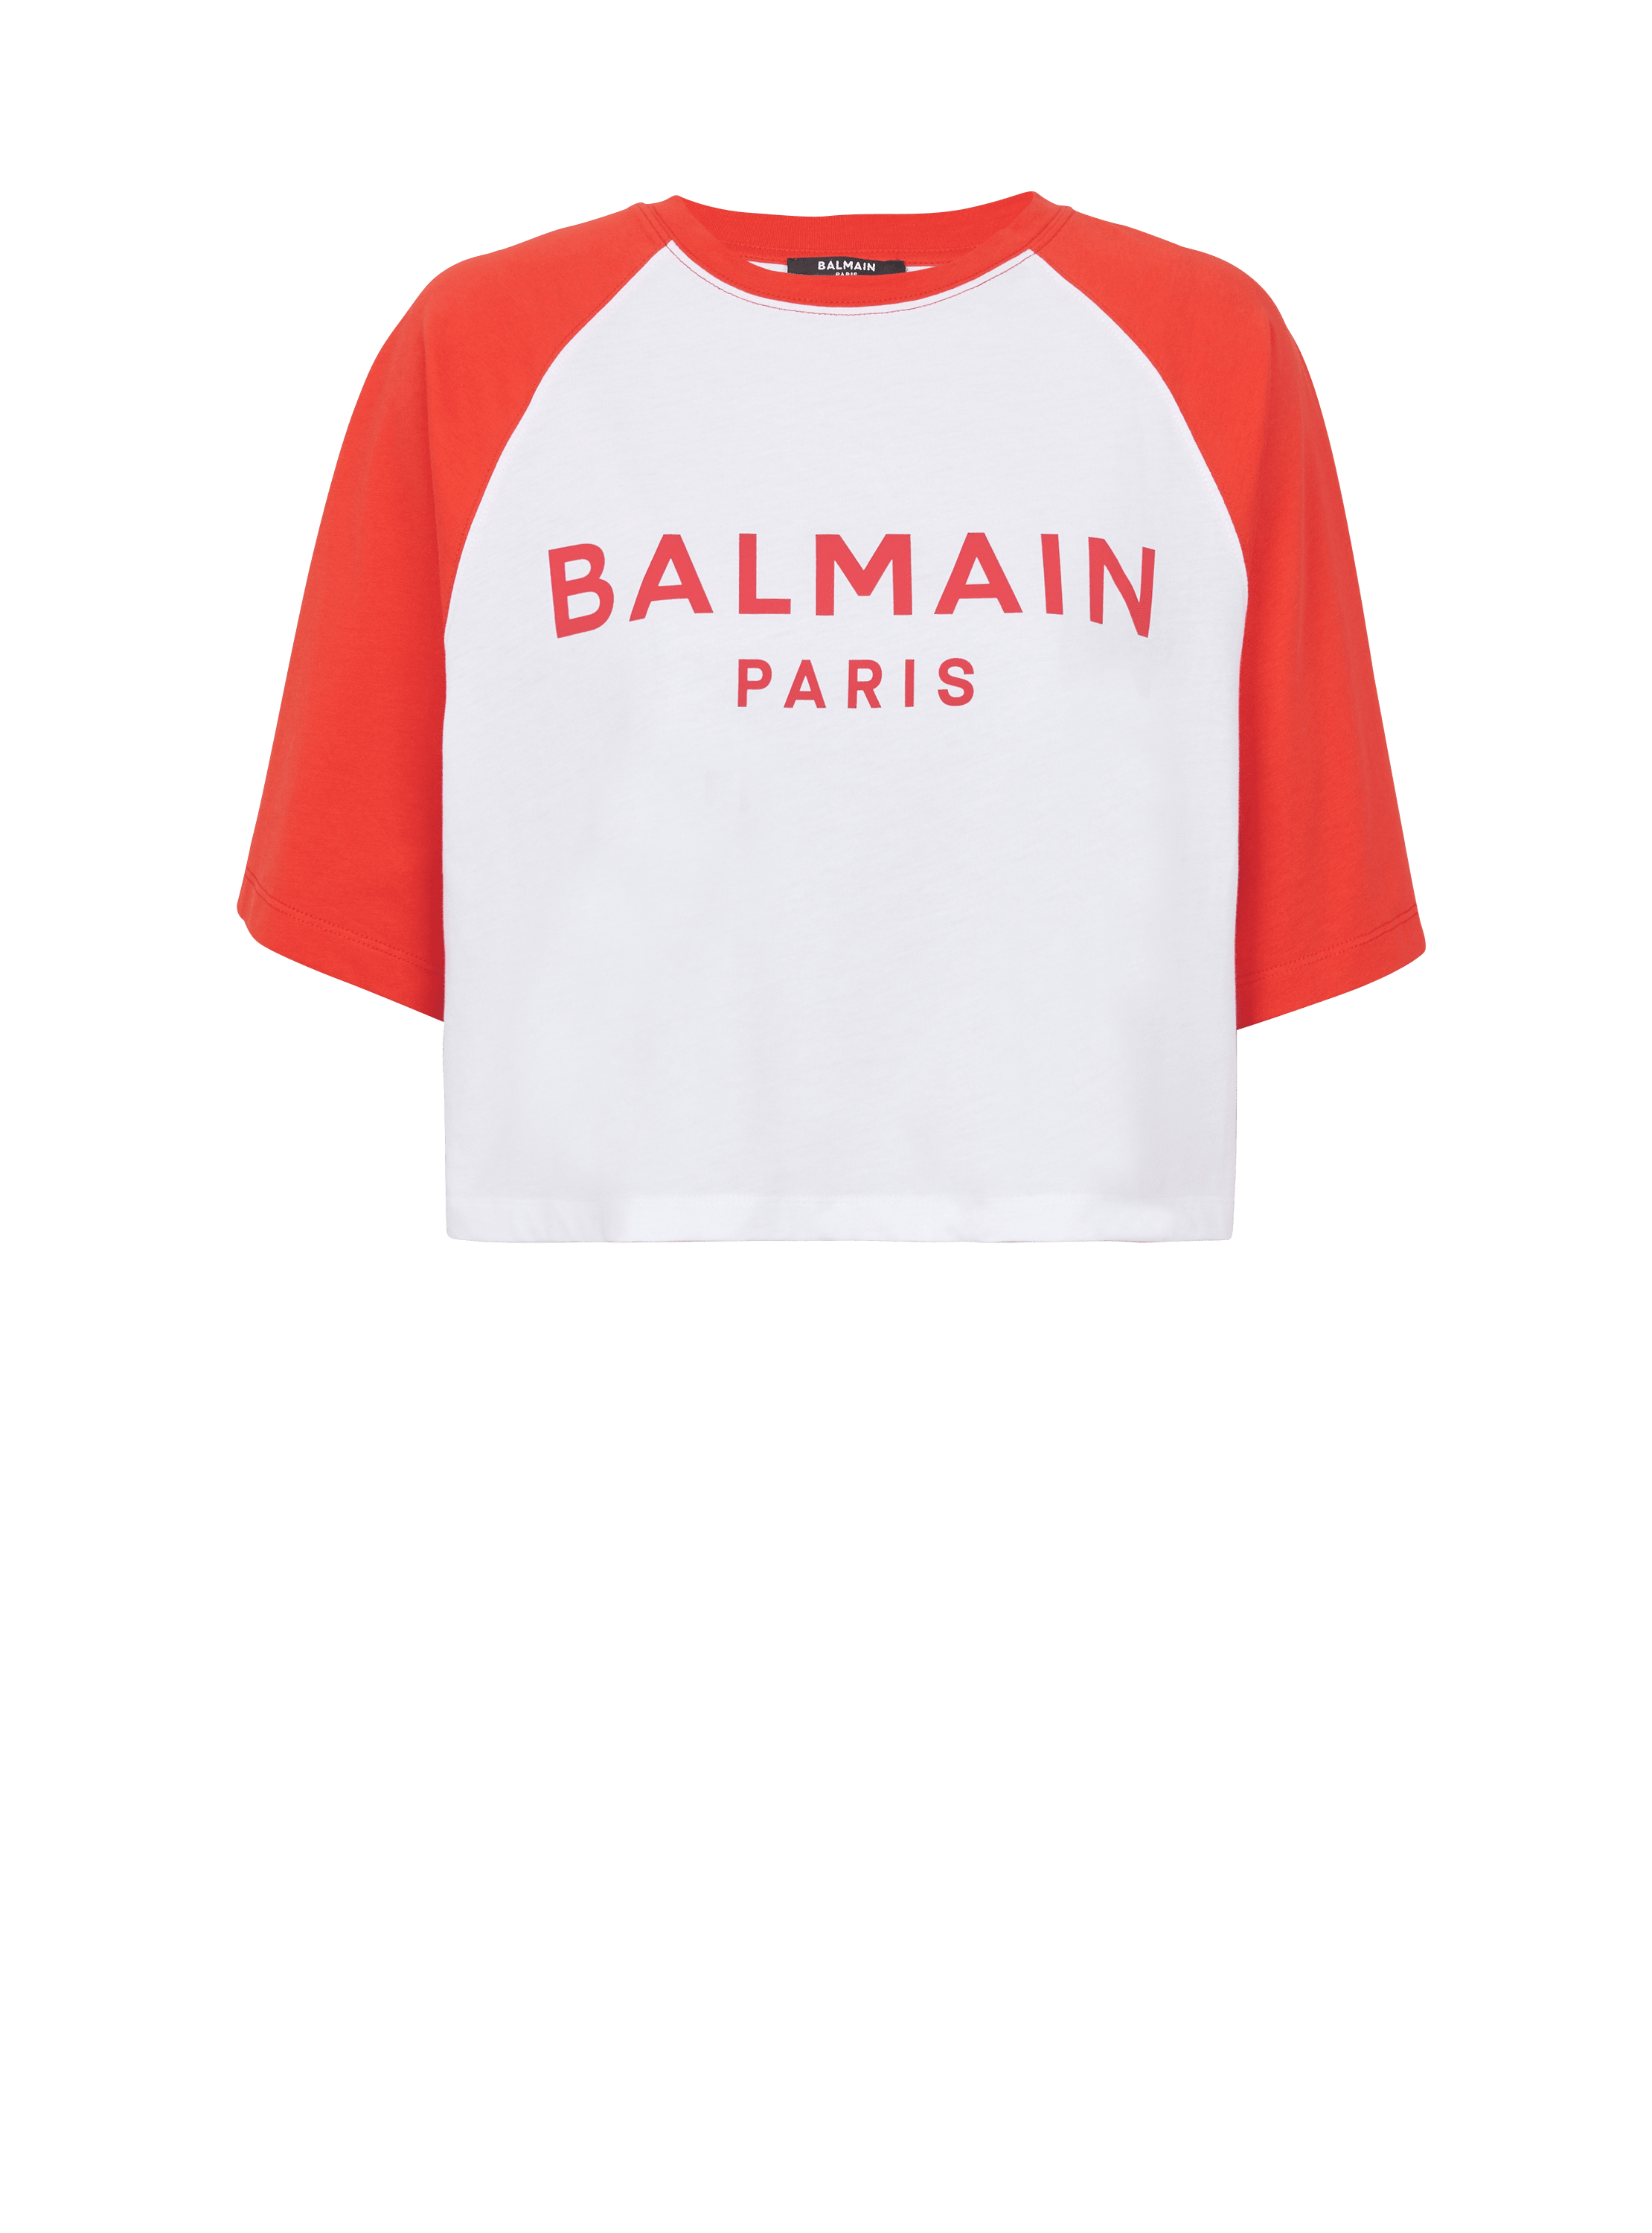 Balmain Paris Womens T-Shirt Size Medium Color White